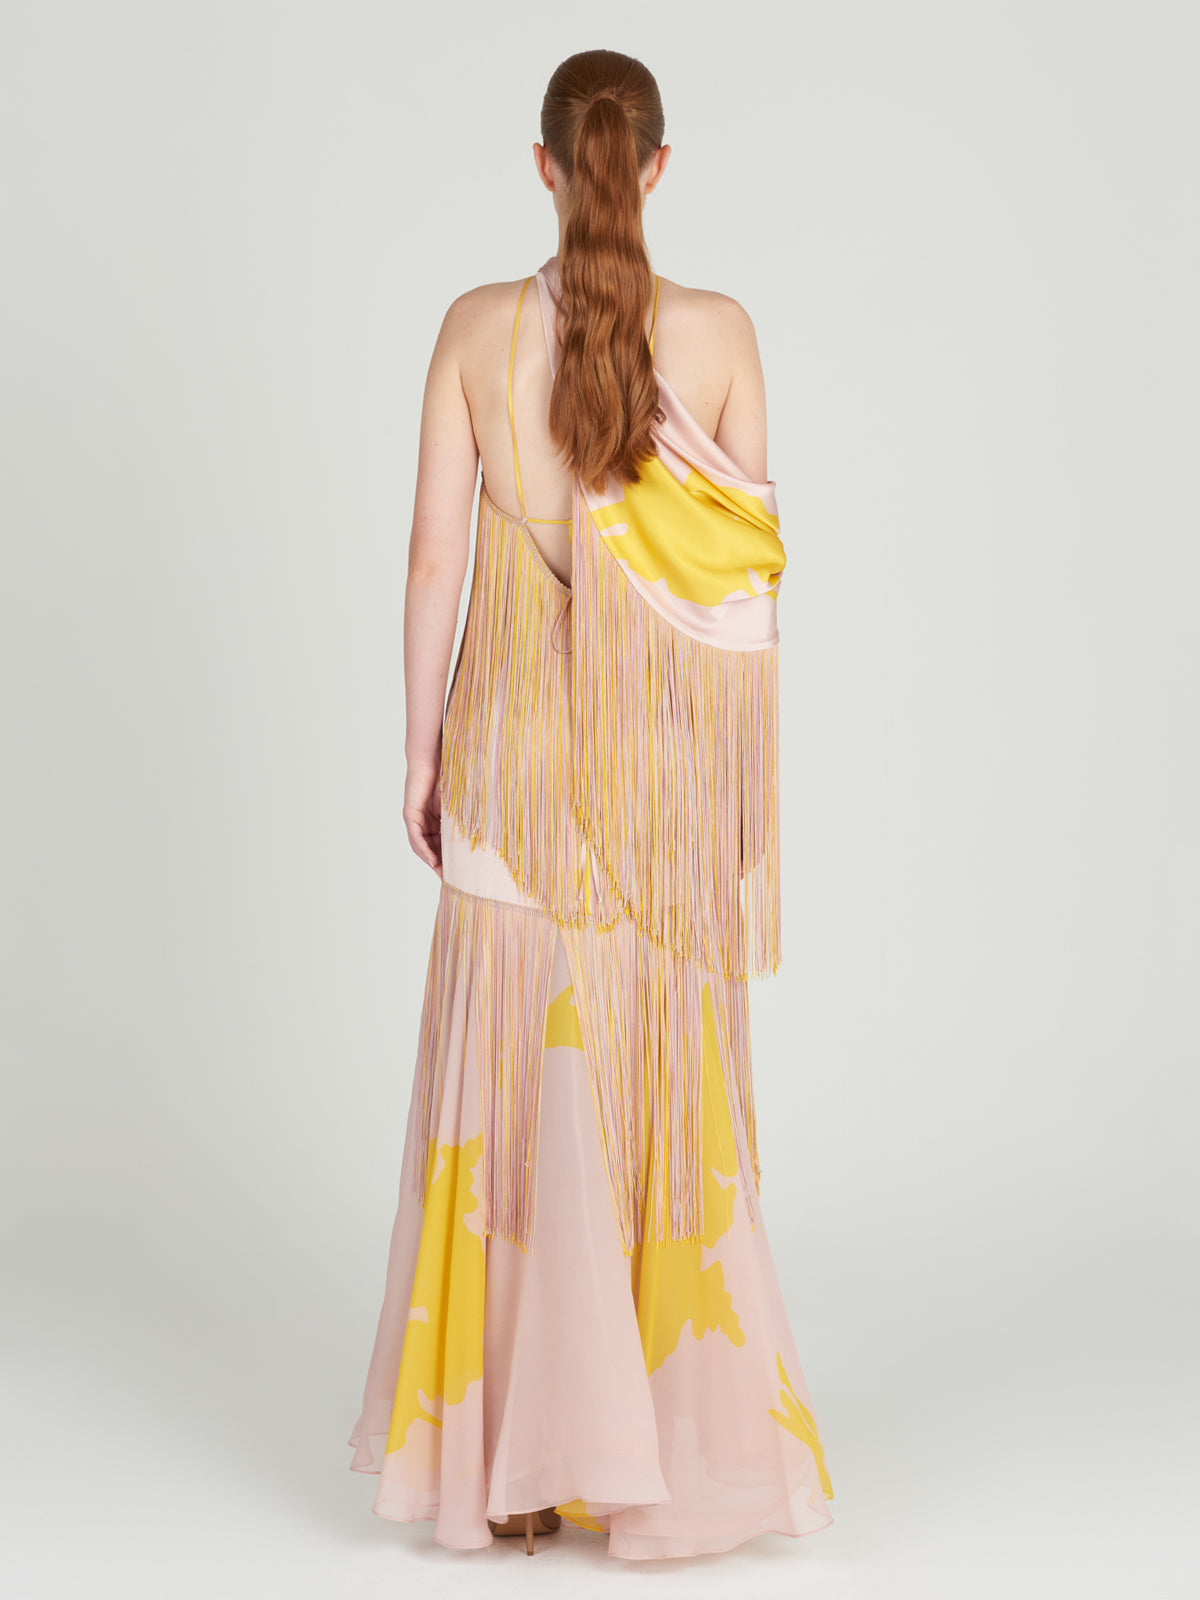 Parma Dress (Yellow-Nude Floral Breeze)